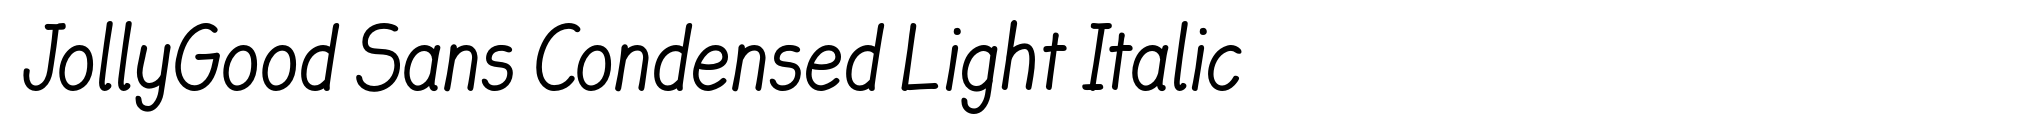 JollyGood Sans Condensed Light Italic image